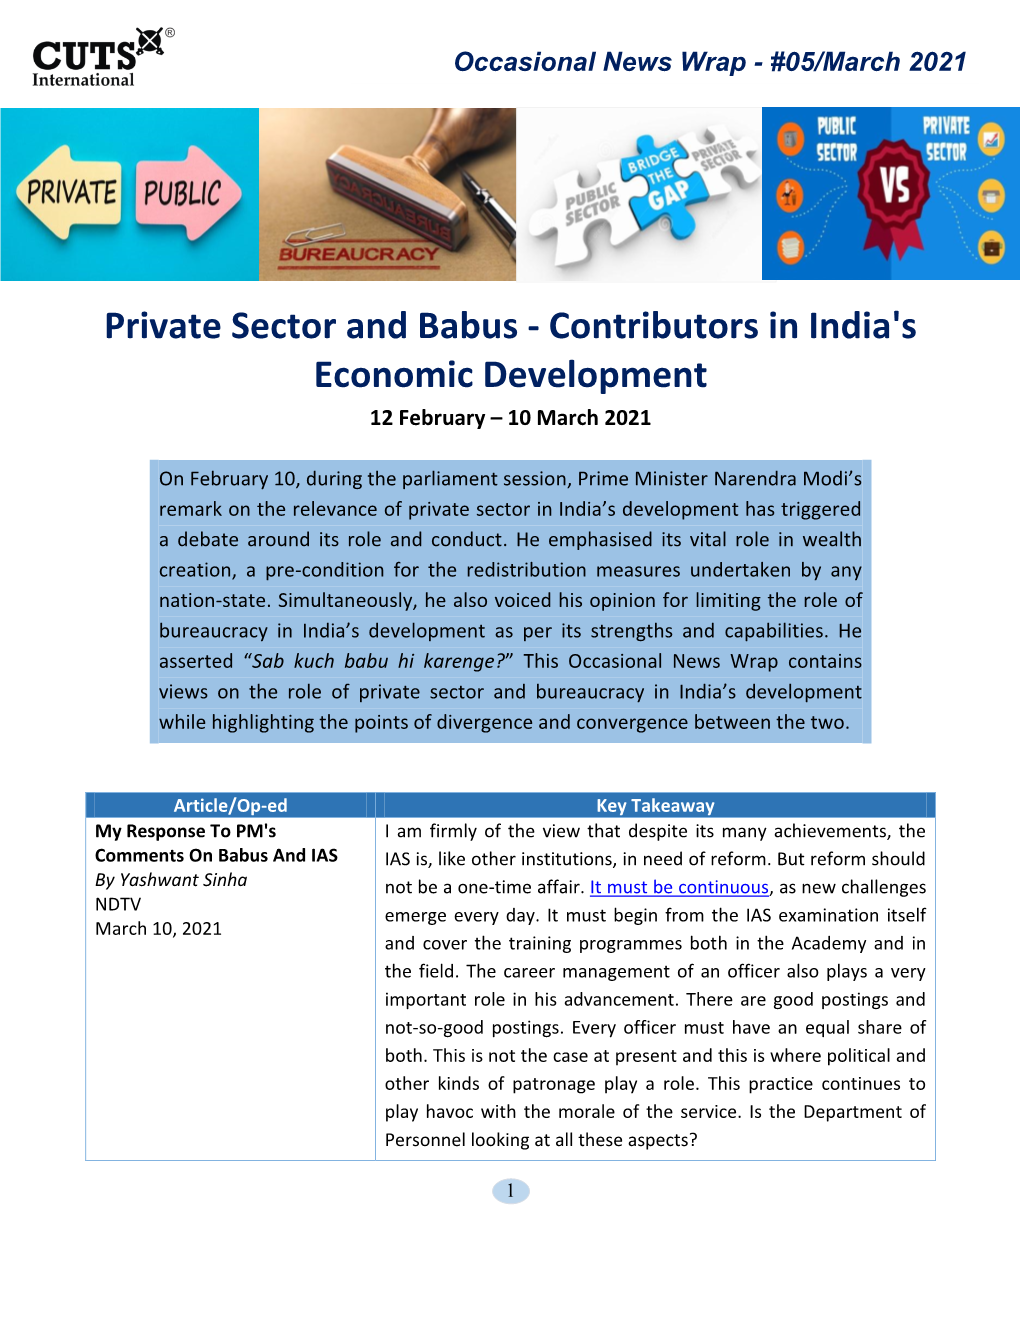 Private Sector and Babus - Contributors in India's Economic Development 12 February – 10 March 2021